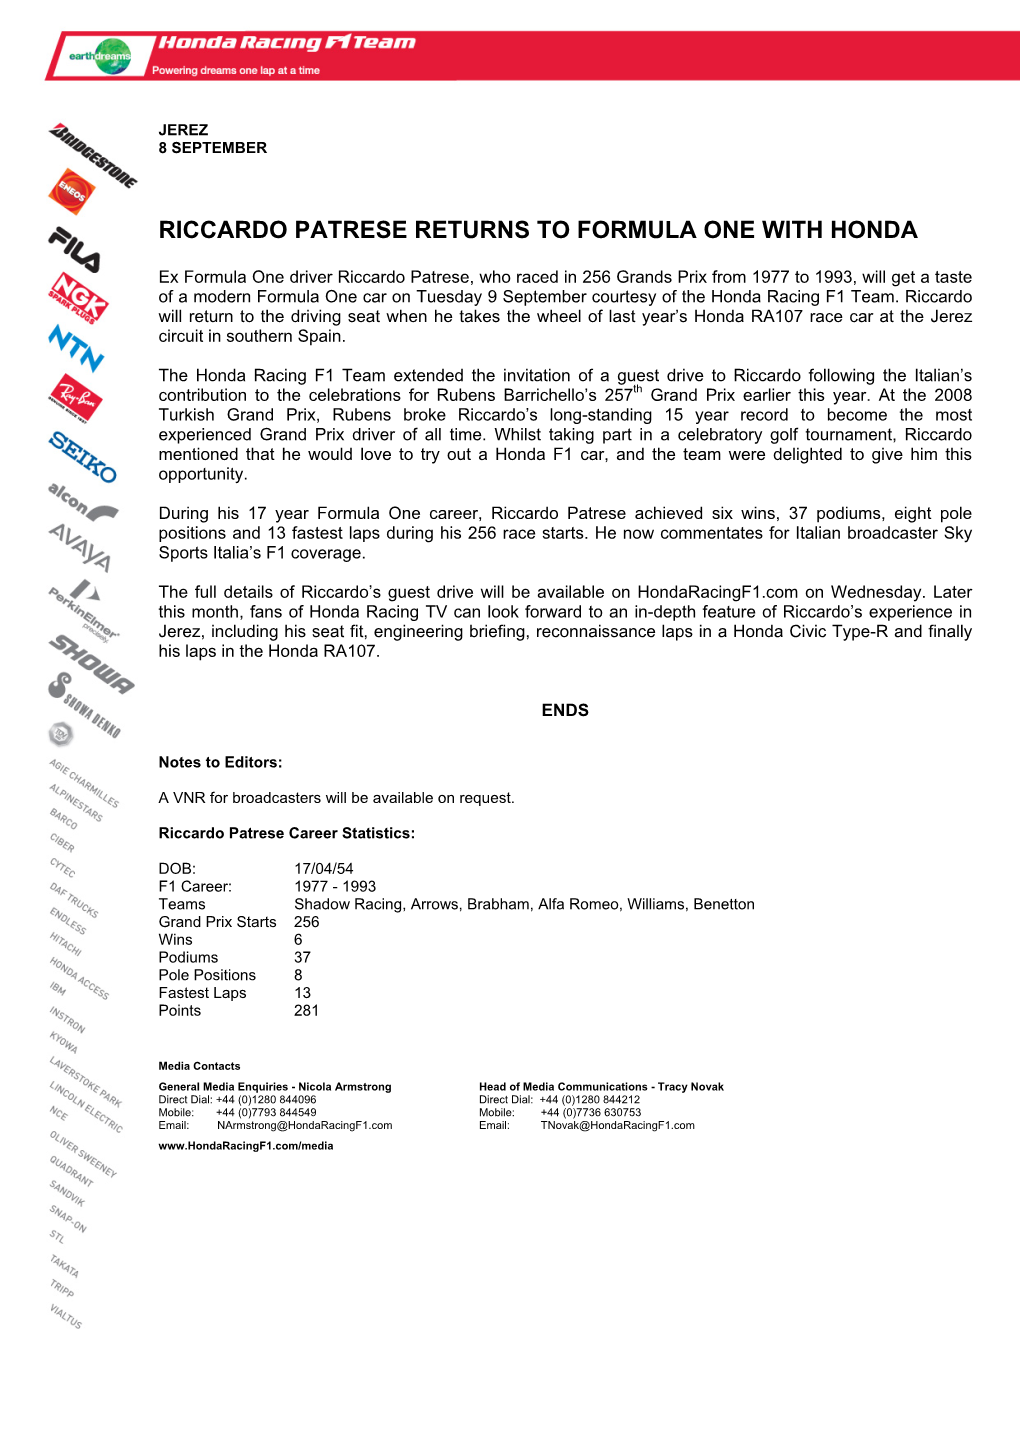 Riccardo Patrese Returns to Formula One with Honda